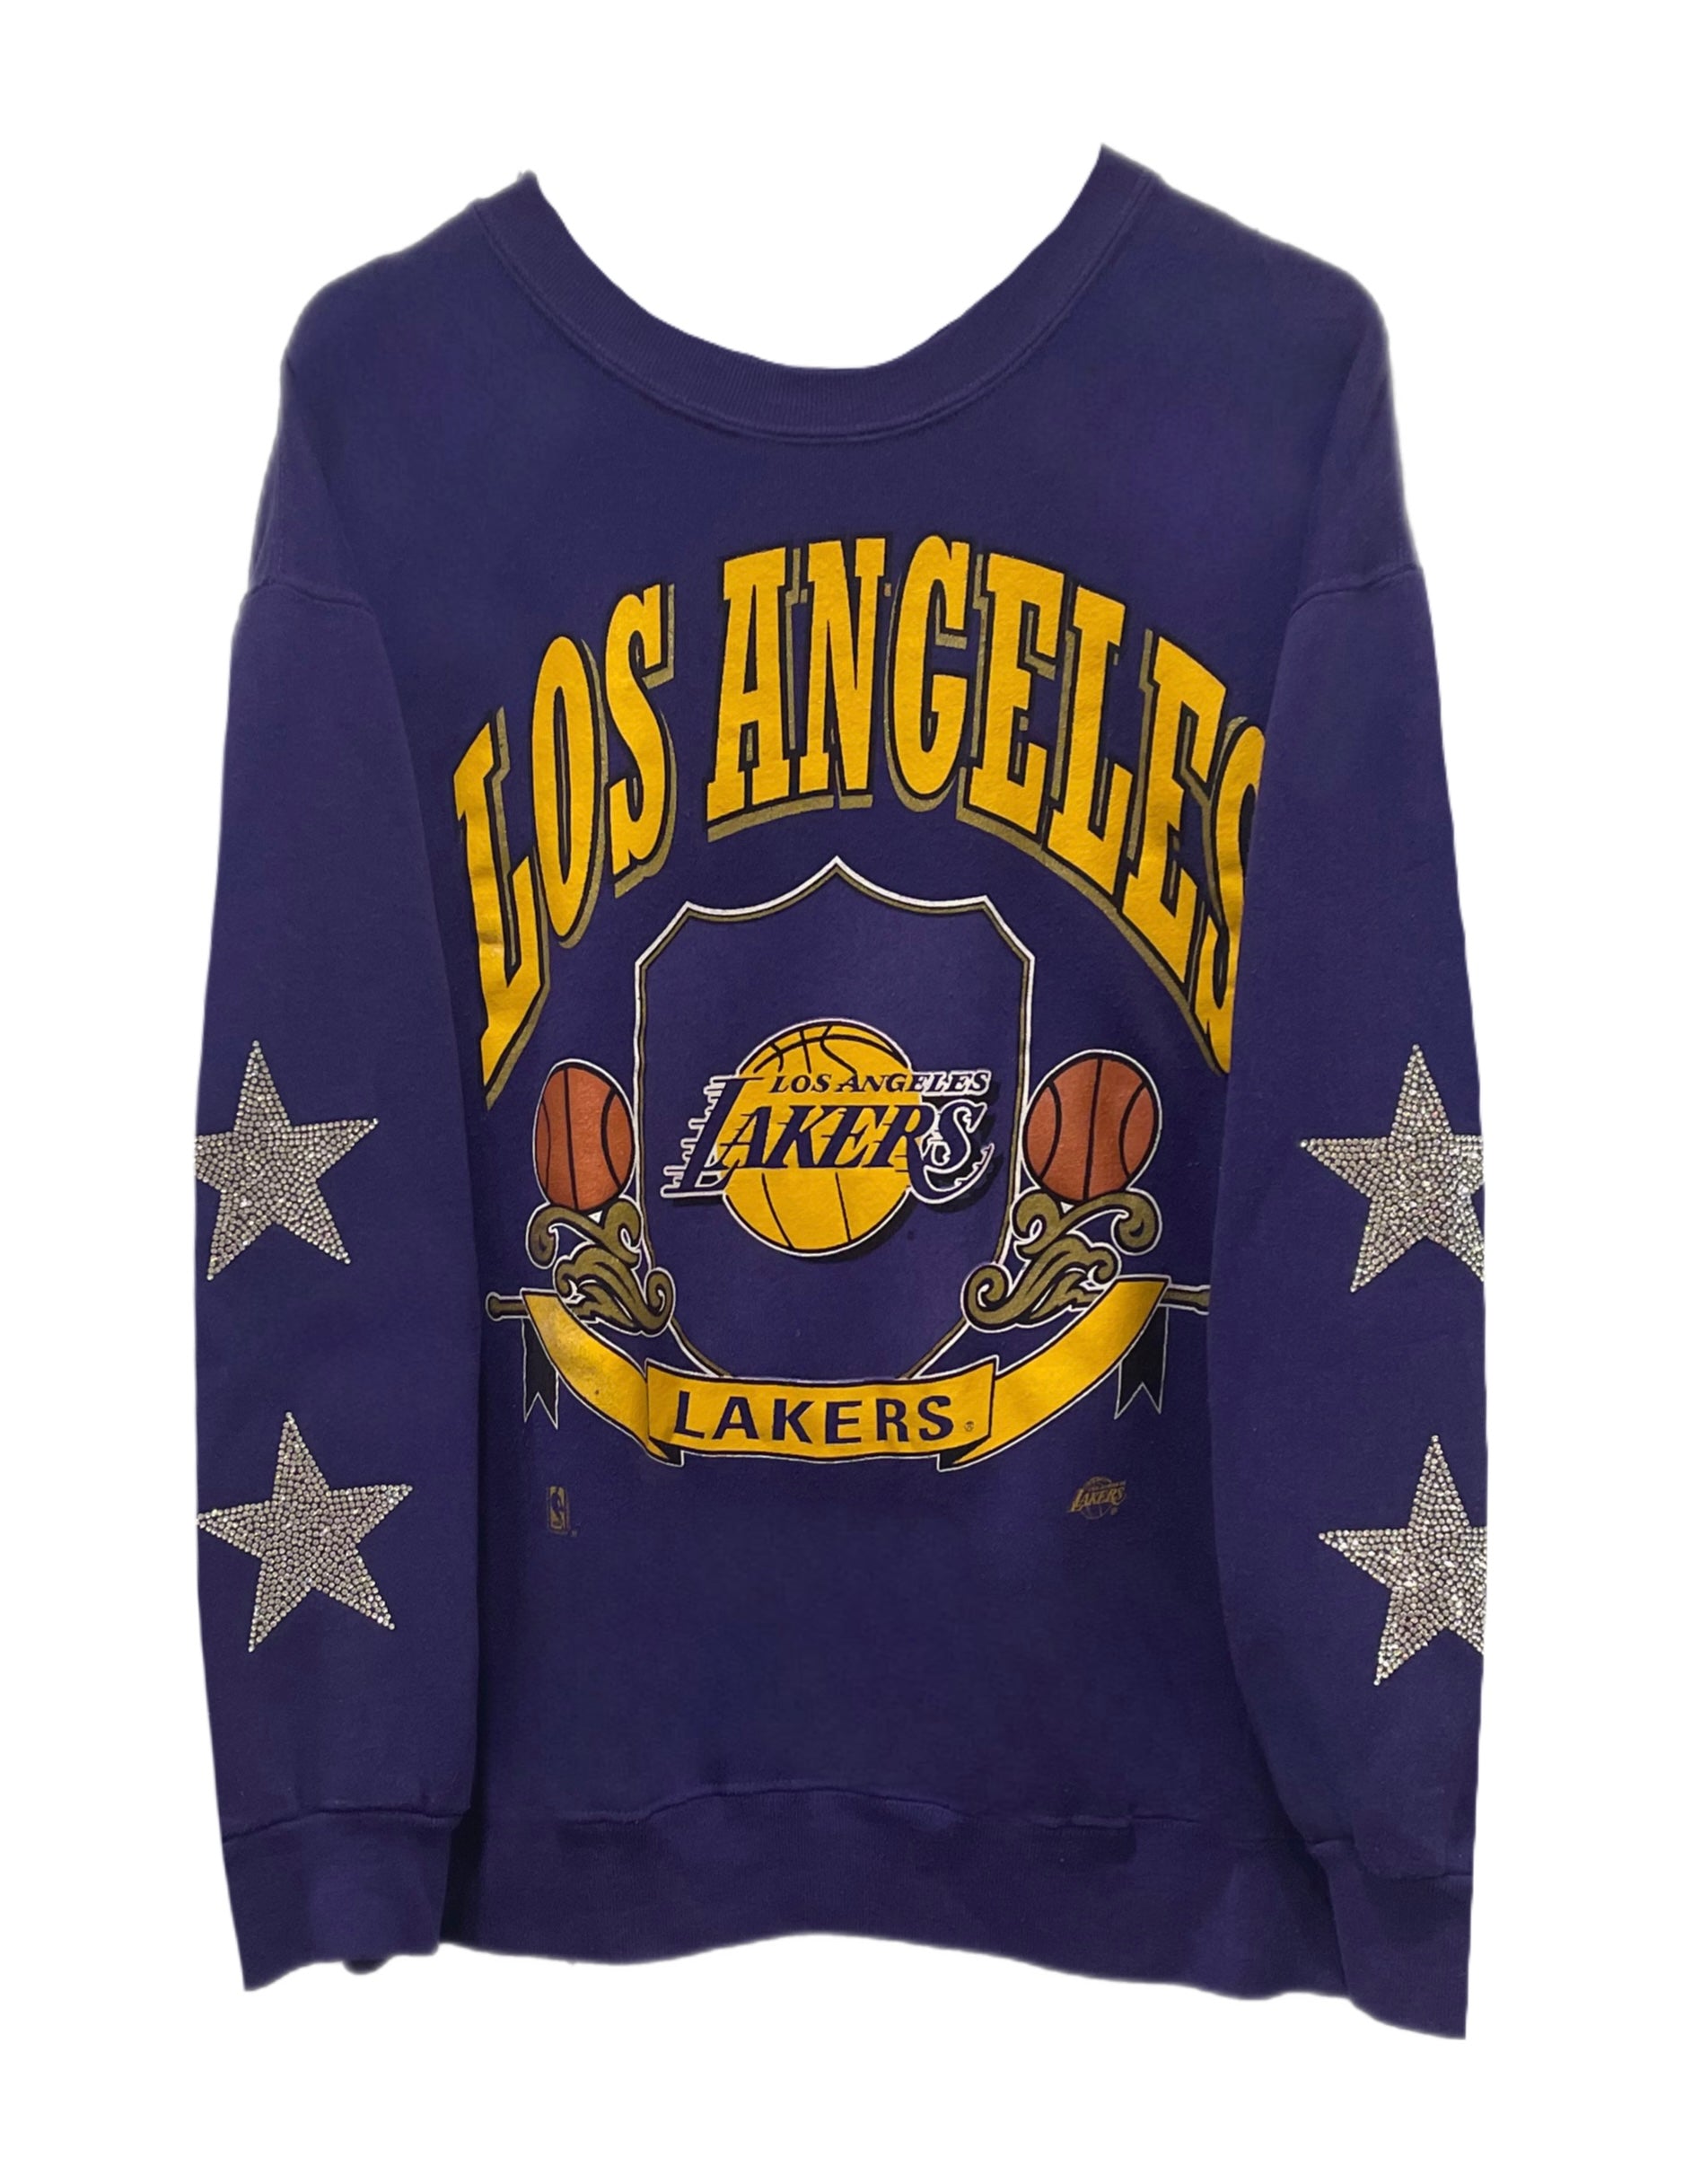 LA Lakers, NBA One of a KIND Vintage Sweatshirt with Crystal Star Design